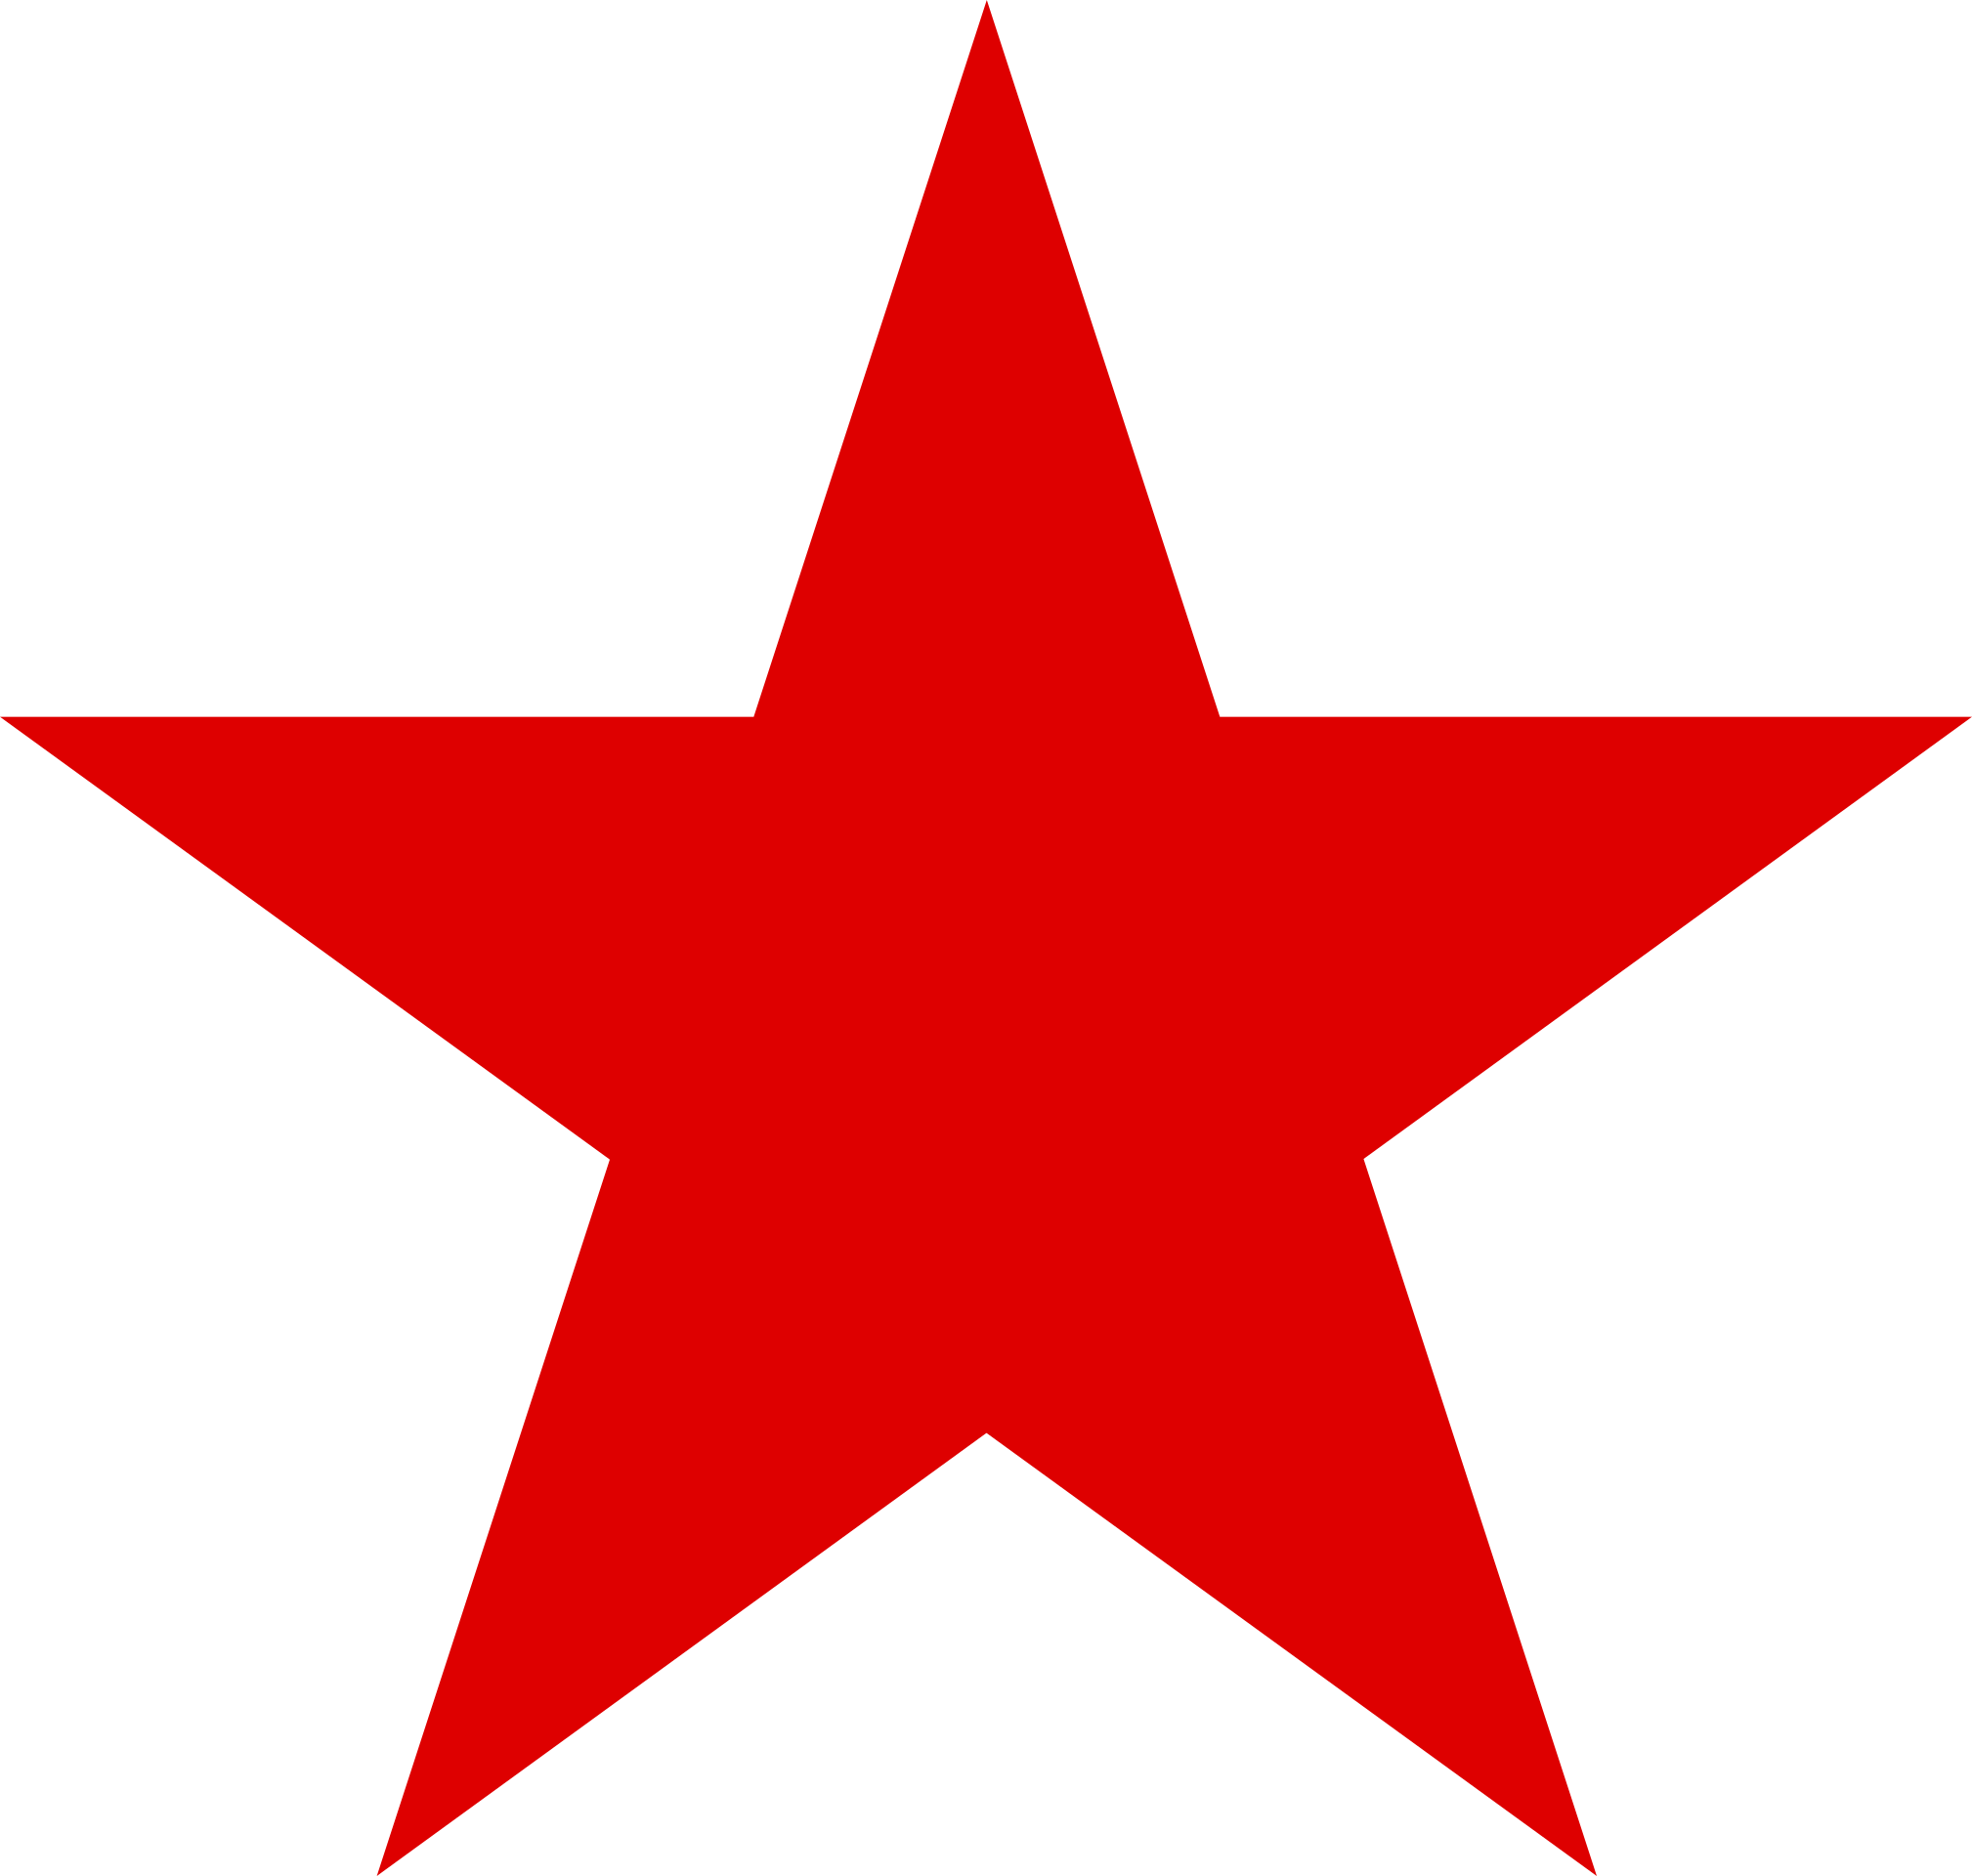 Macy's Star Logo - The Shiny Bright Red Holiday Star Brand(s) | DuetsBlog